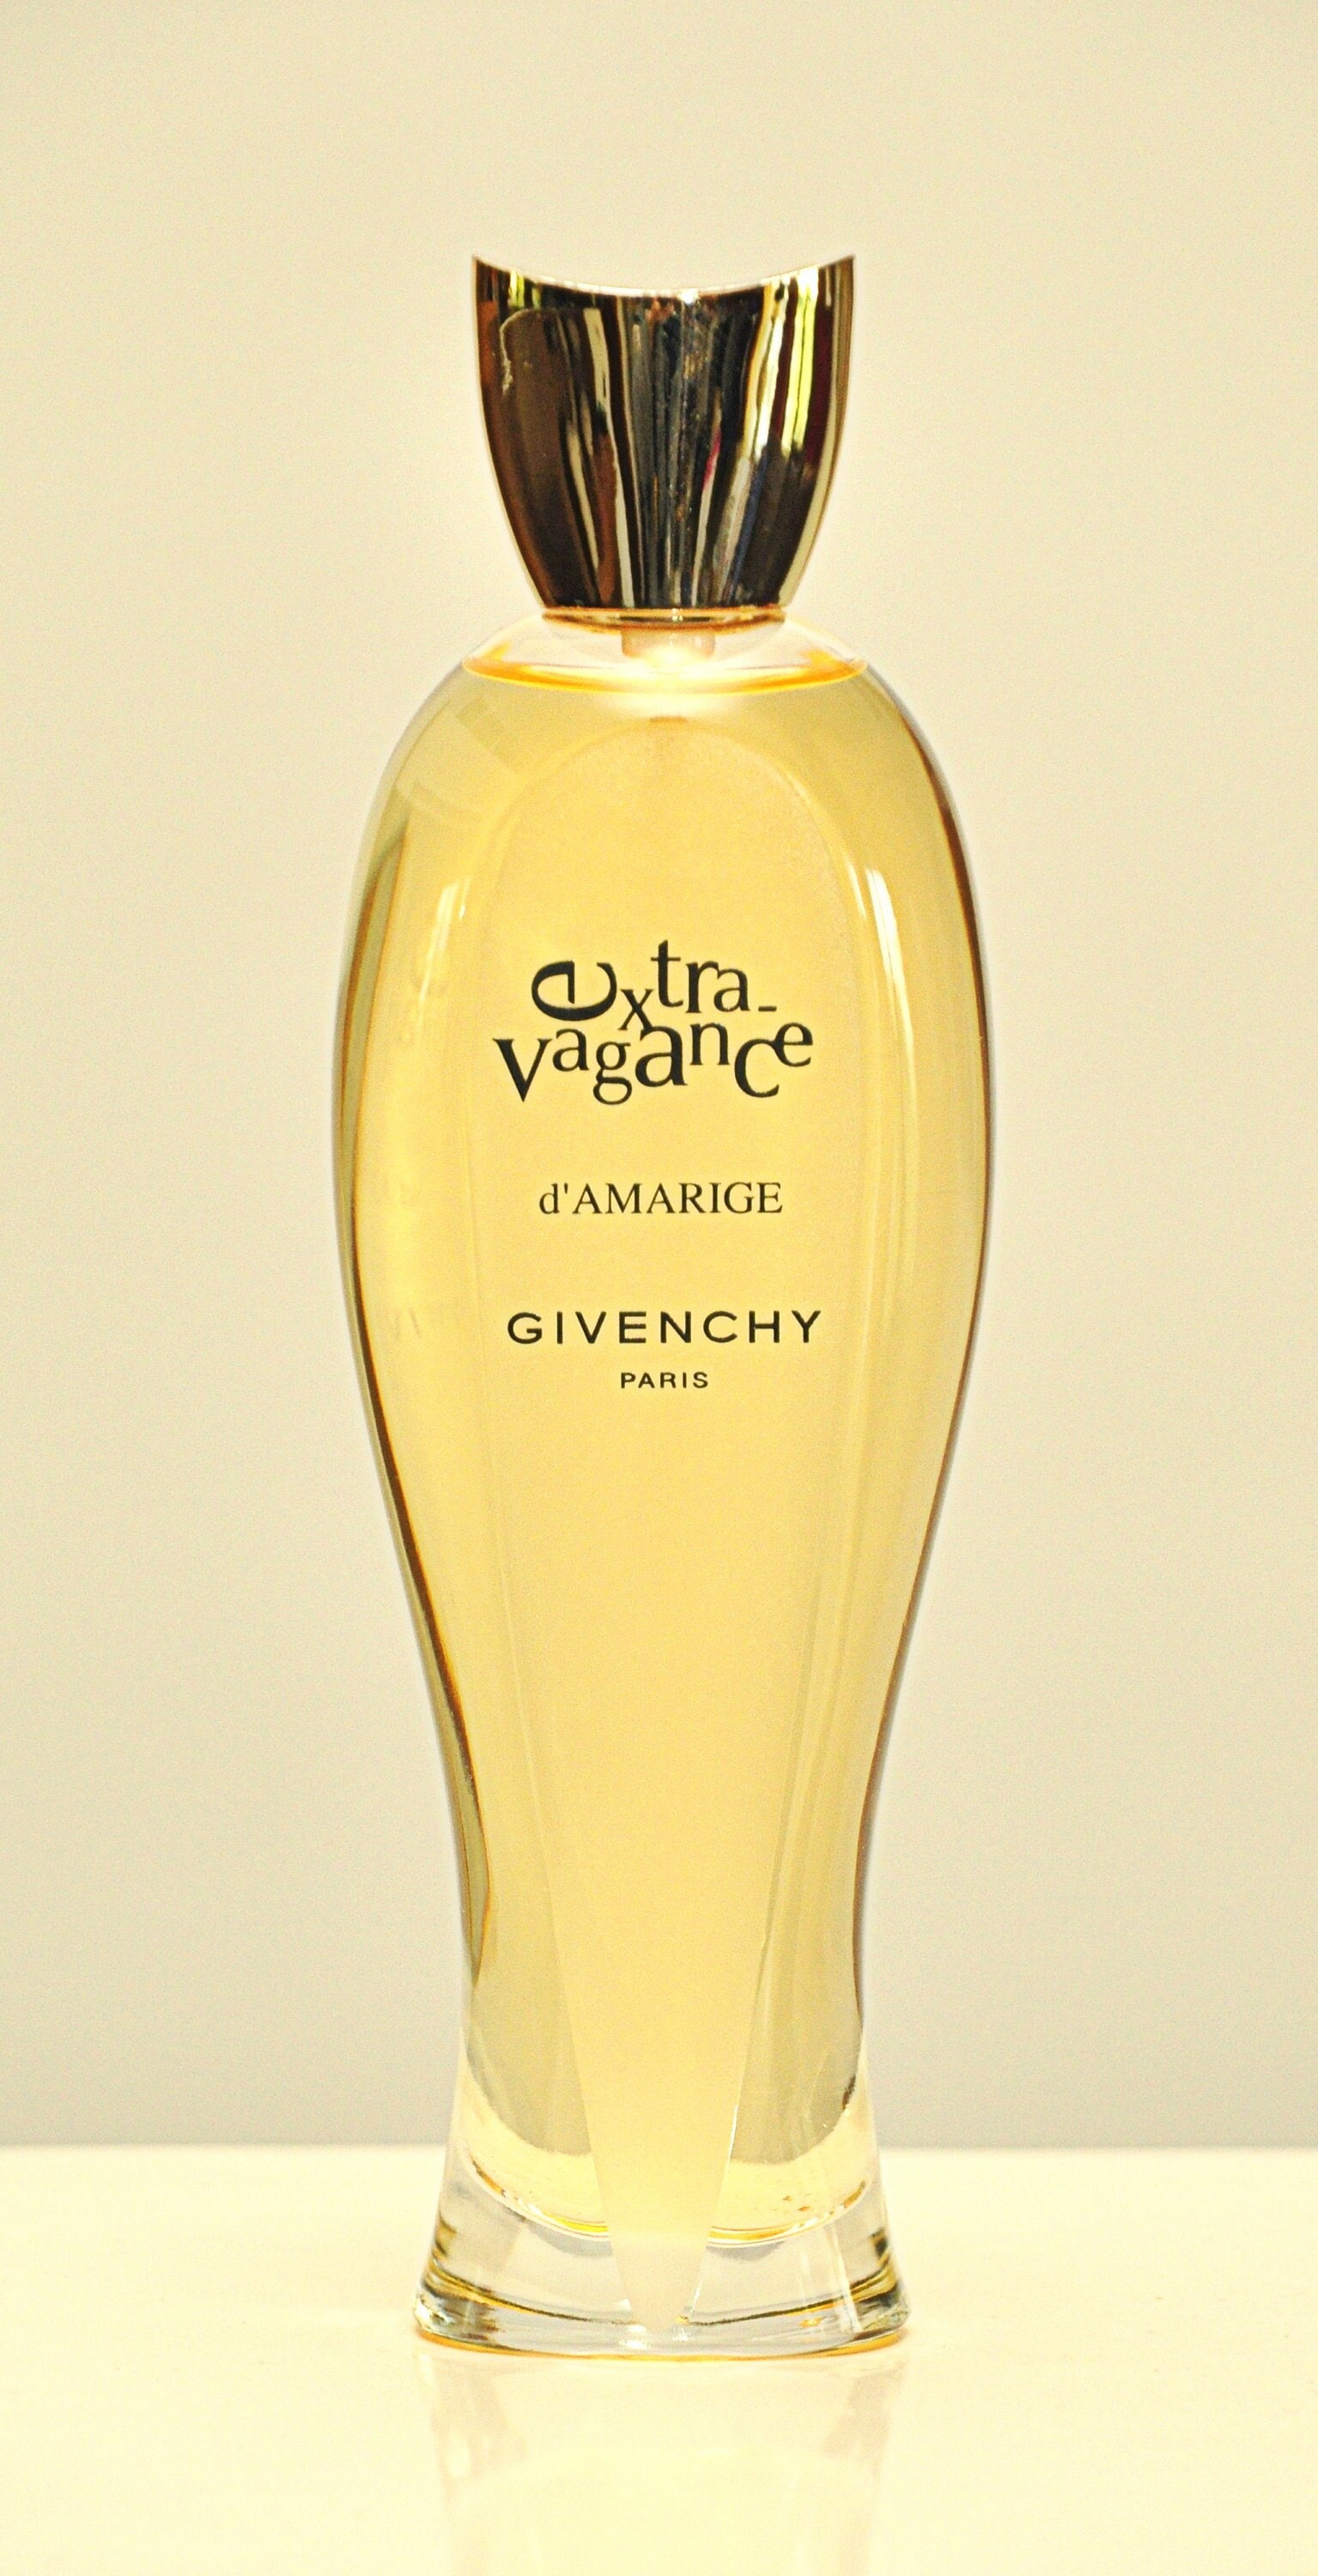 Givenchy Extravagance dAmarige Eau de Toilette Spray 100ml Parfum Femme  Rare Millésime 1998 - Etsy France